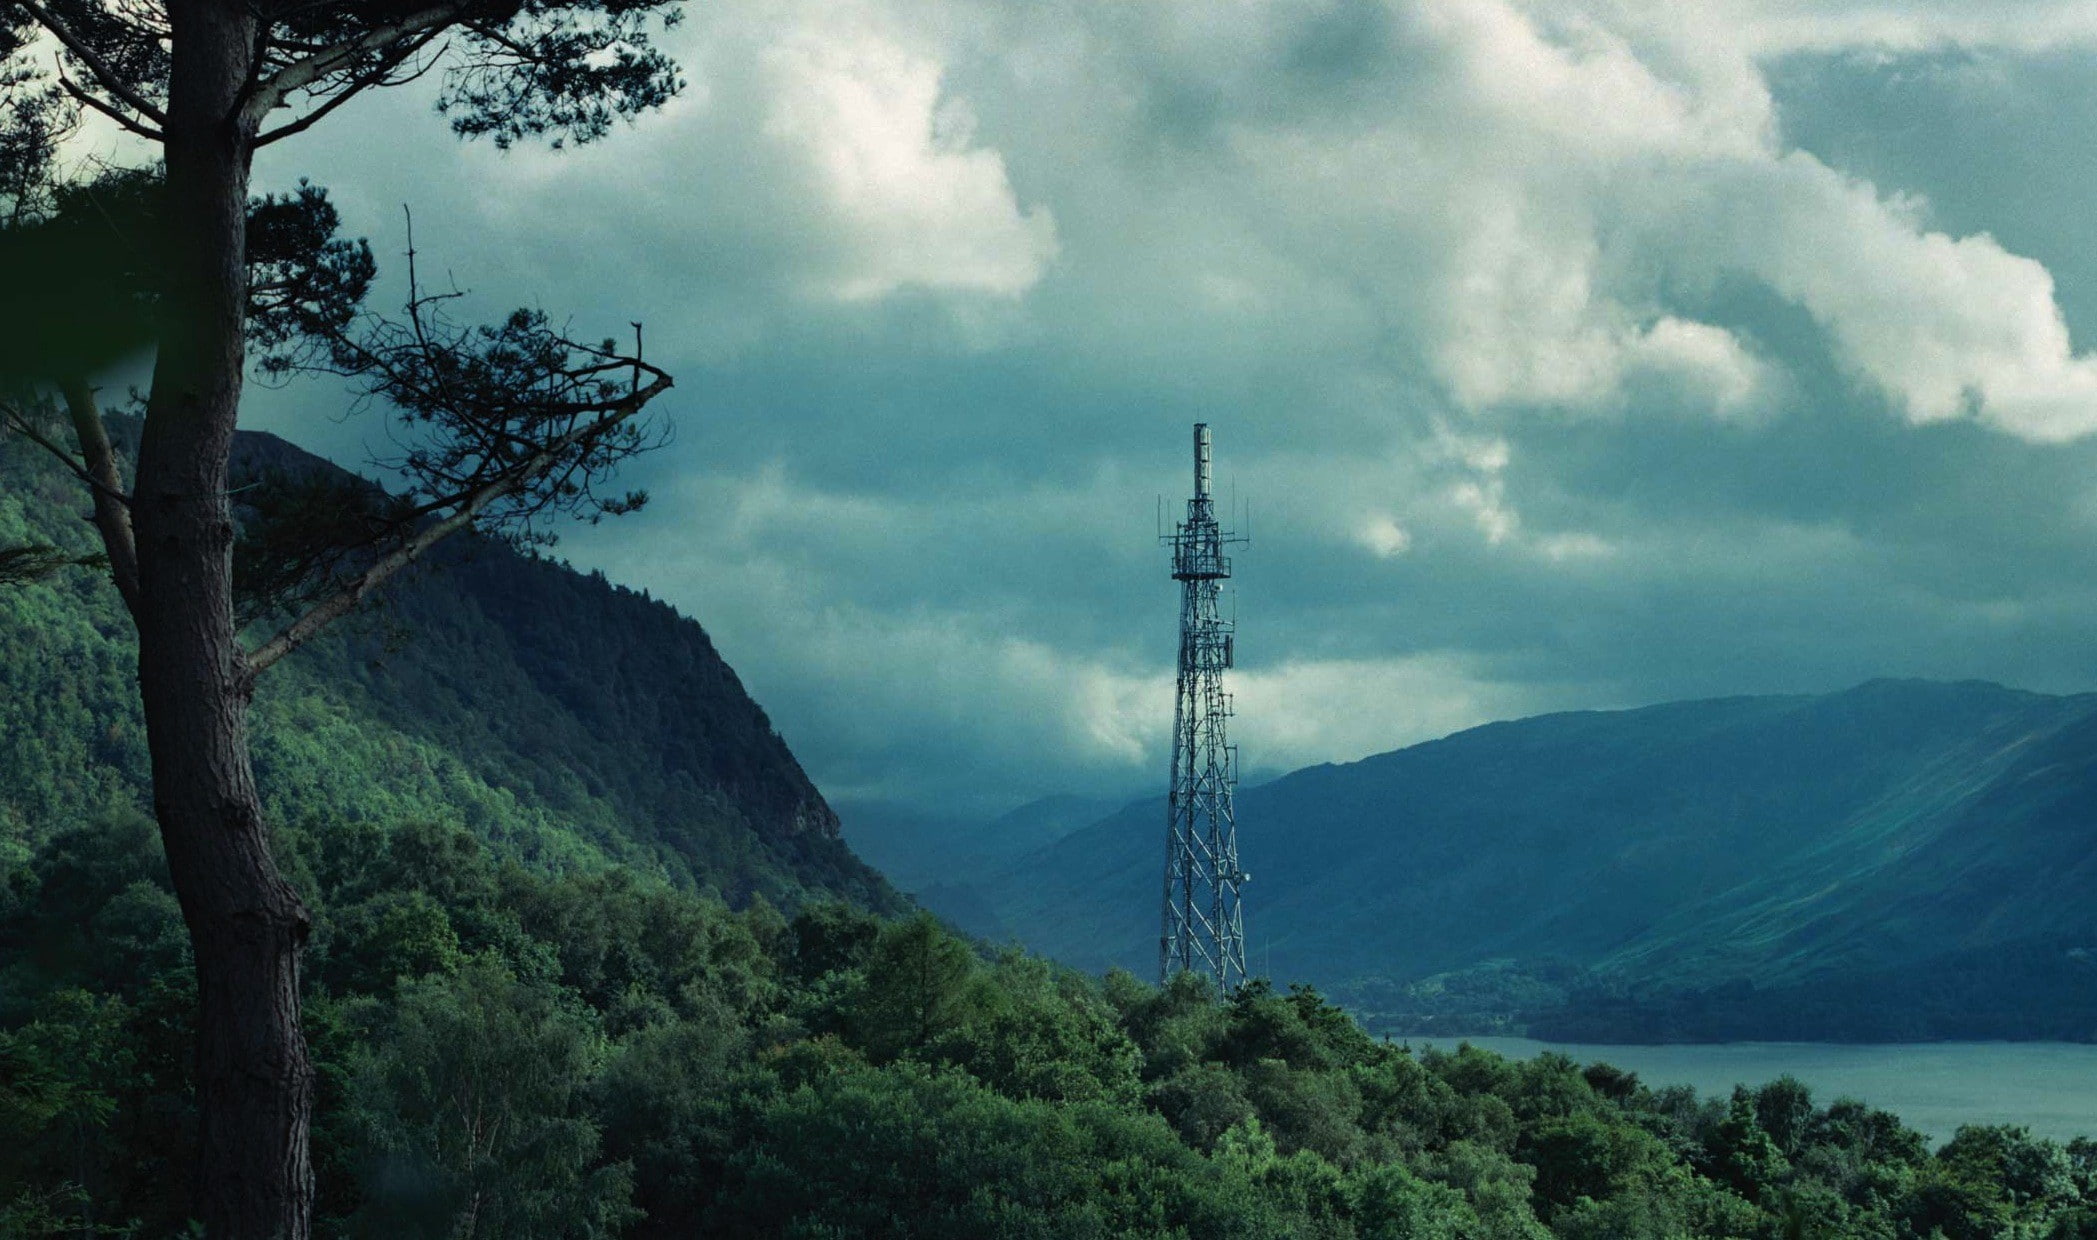 Bonobo, album covers, nature, green, trees, tower, landscape